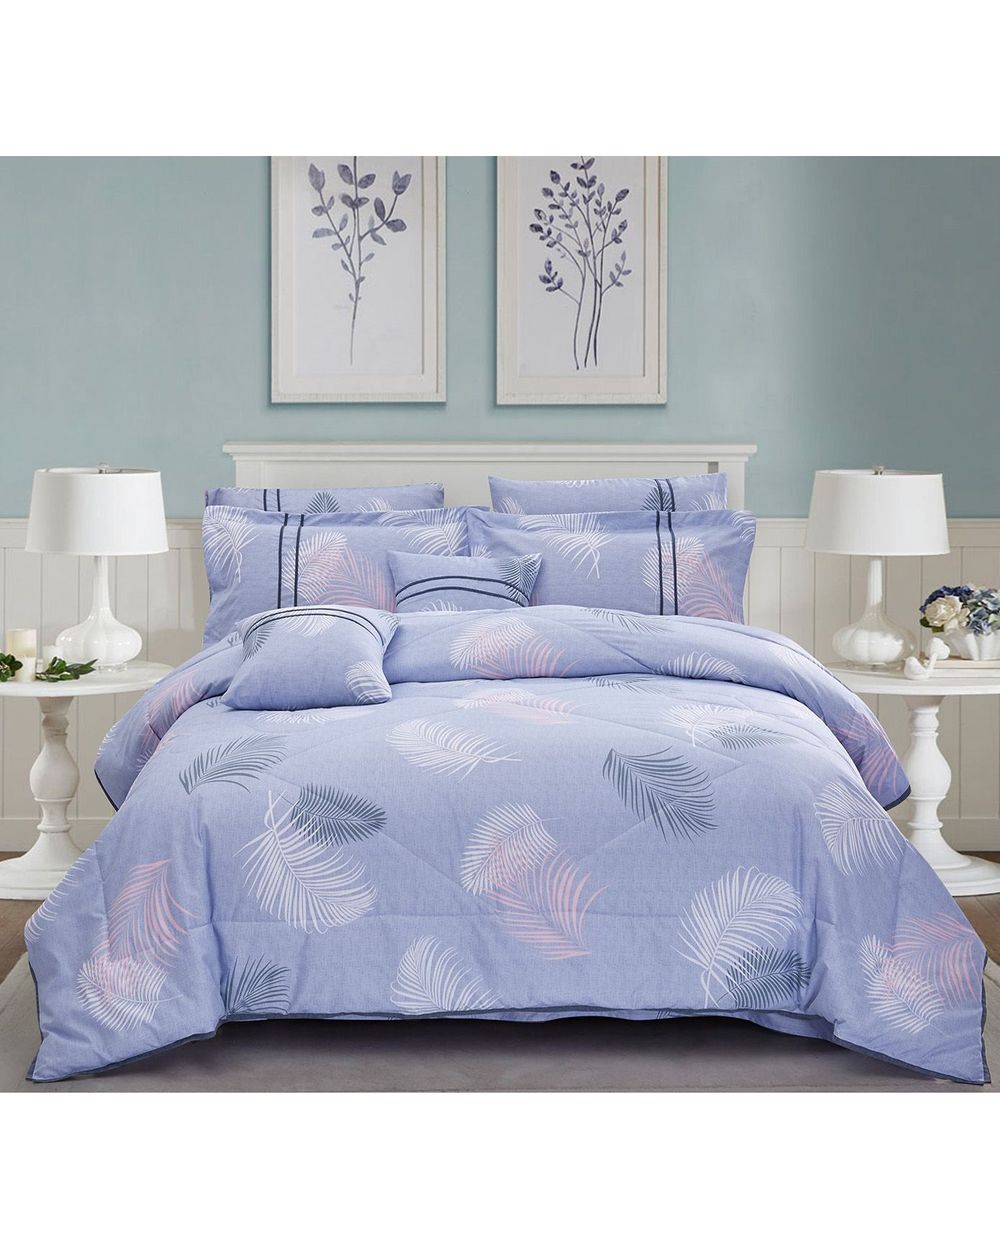 Single Bed Comforter Set Ambt5pc2, White Single Bed Comforter Set